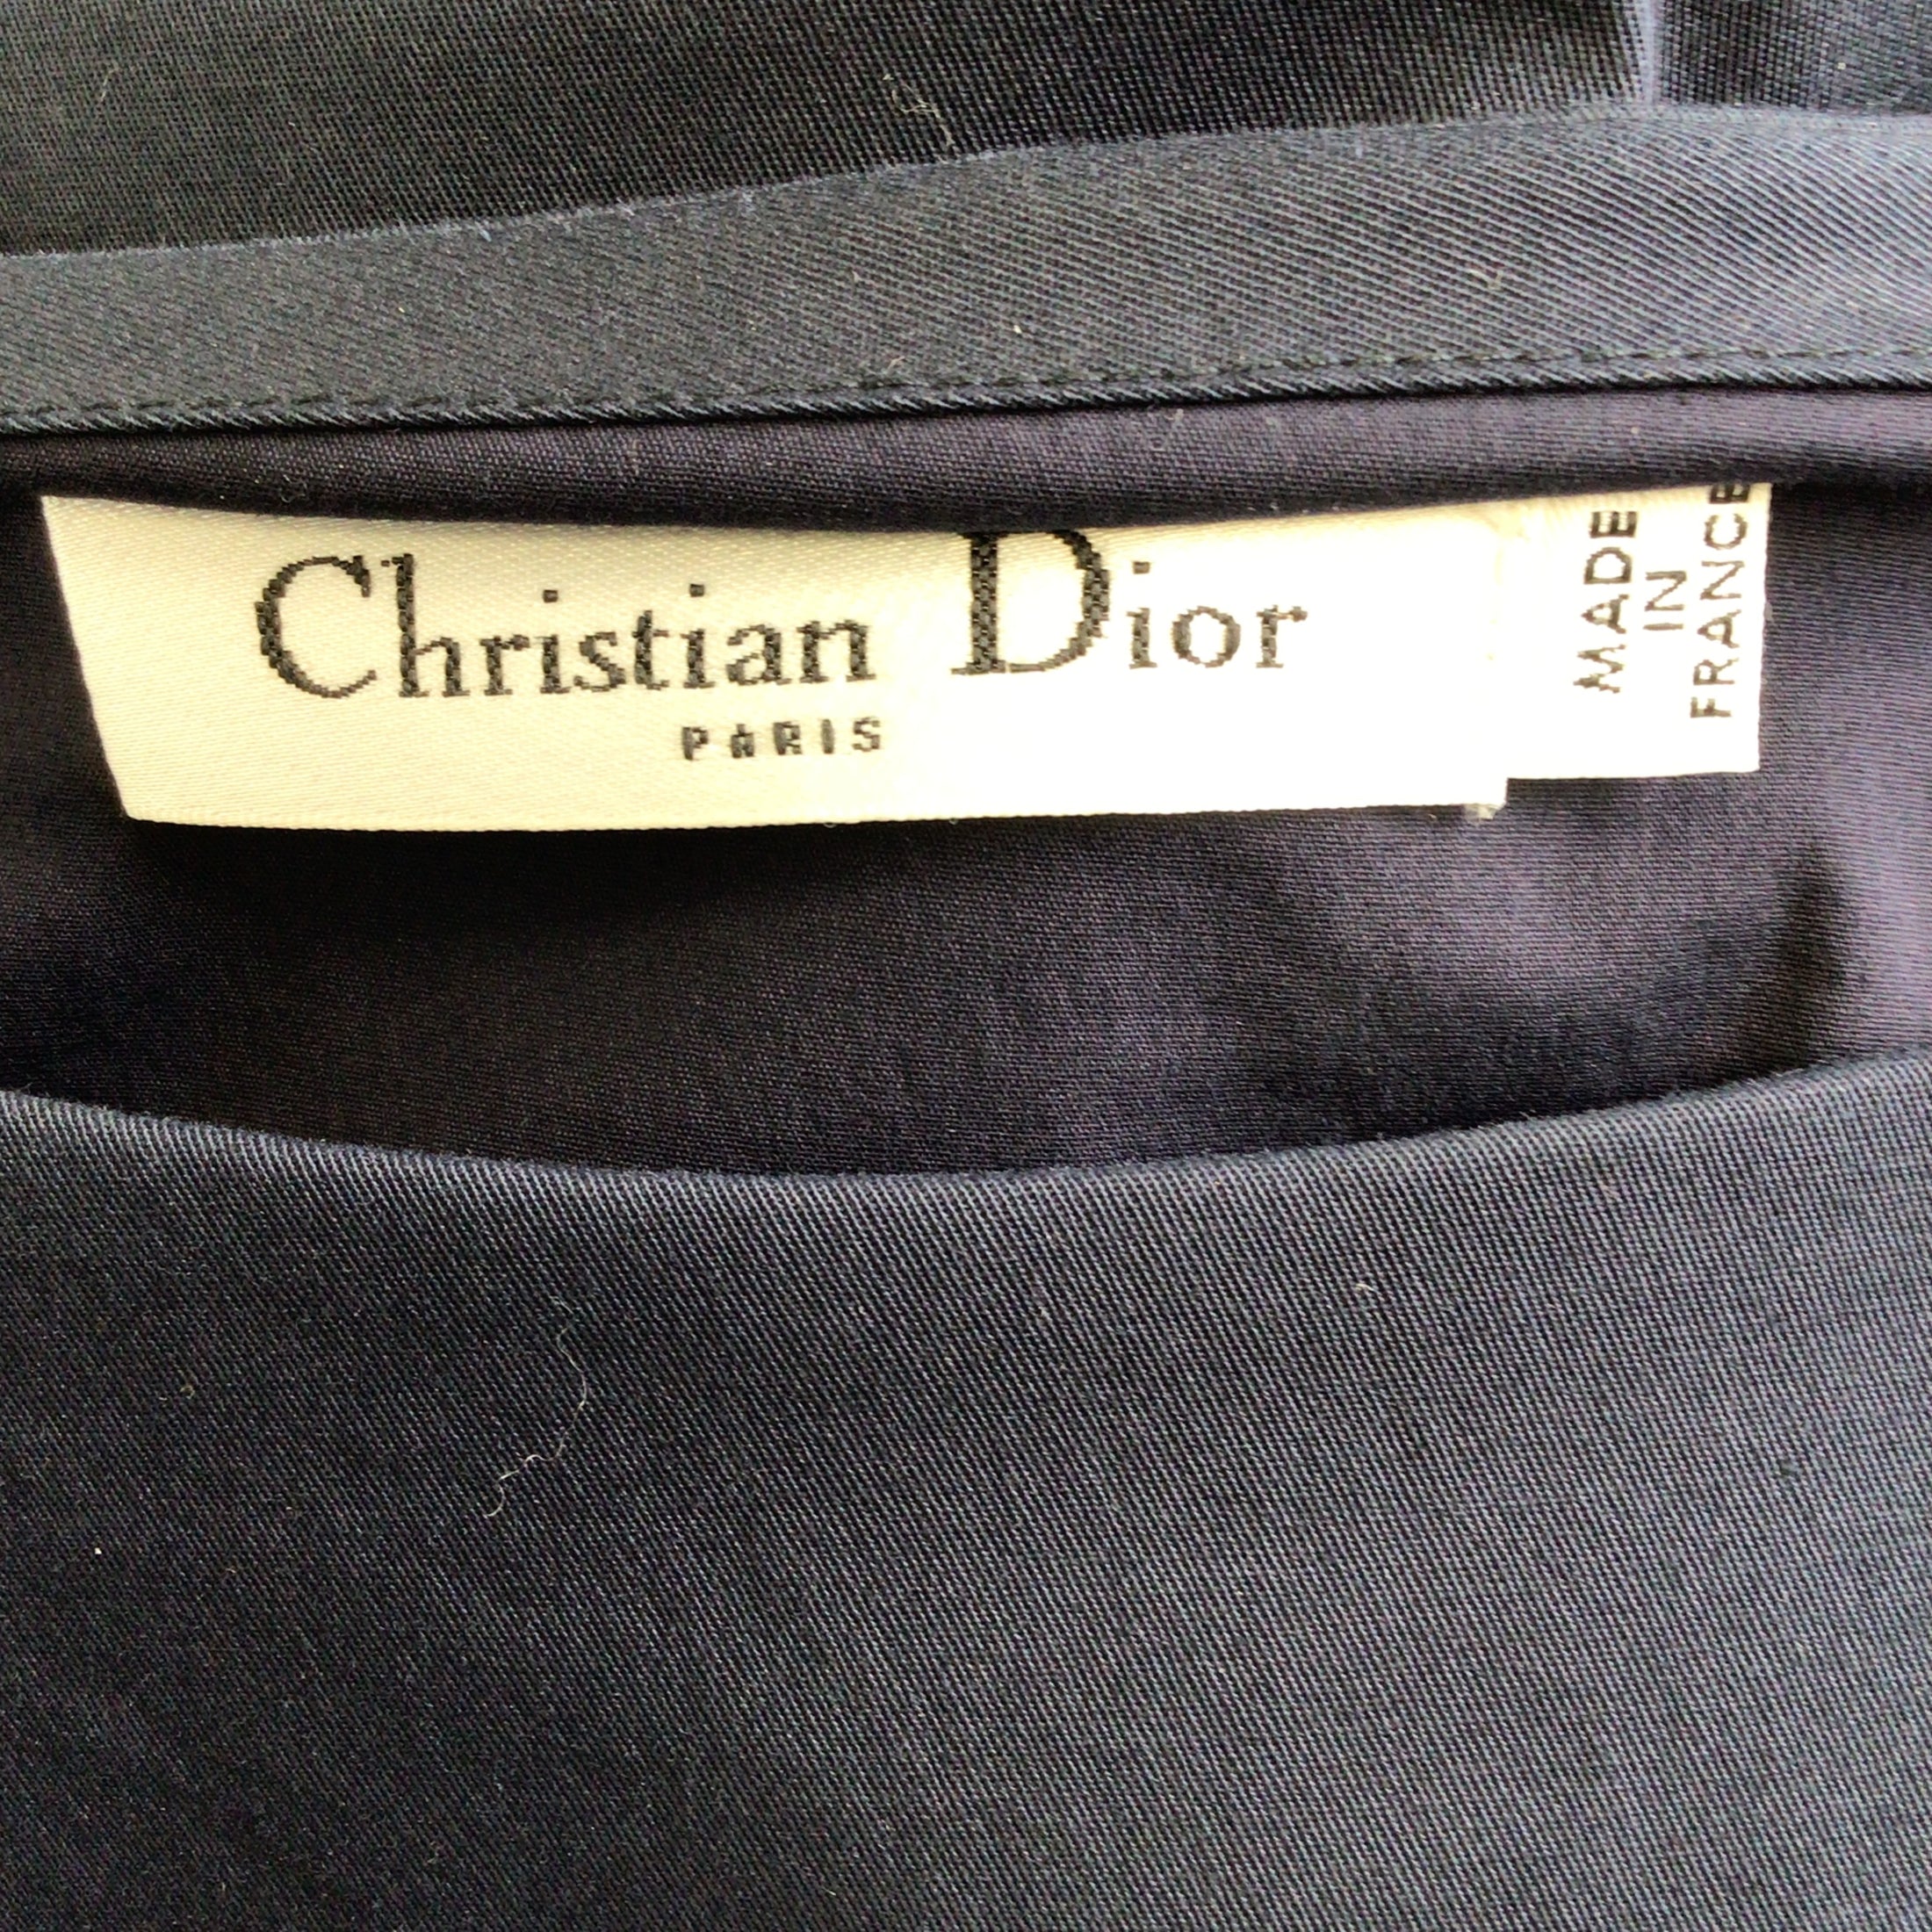 Christian Dior Navy Blue Sleeveless Bateau Neck Cotton Dress